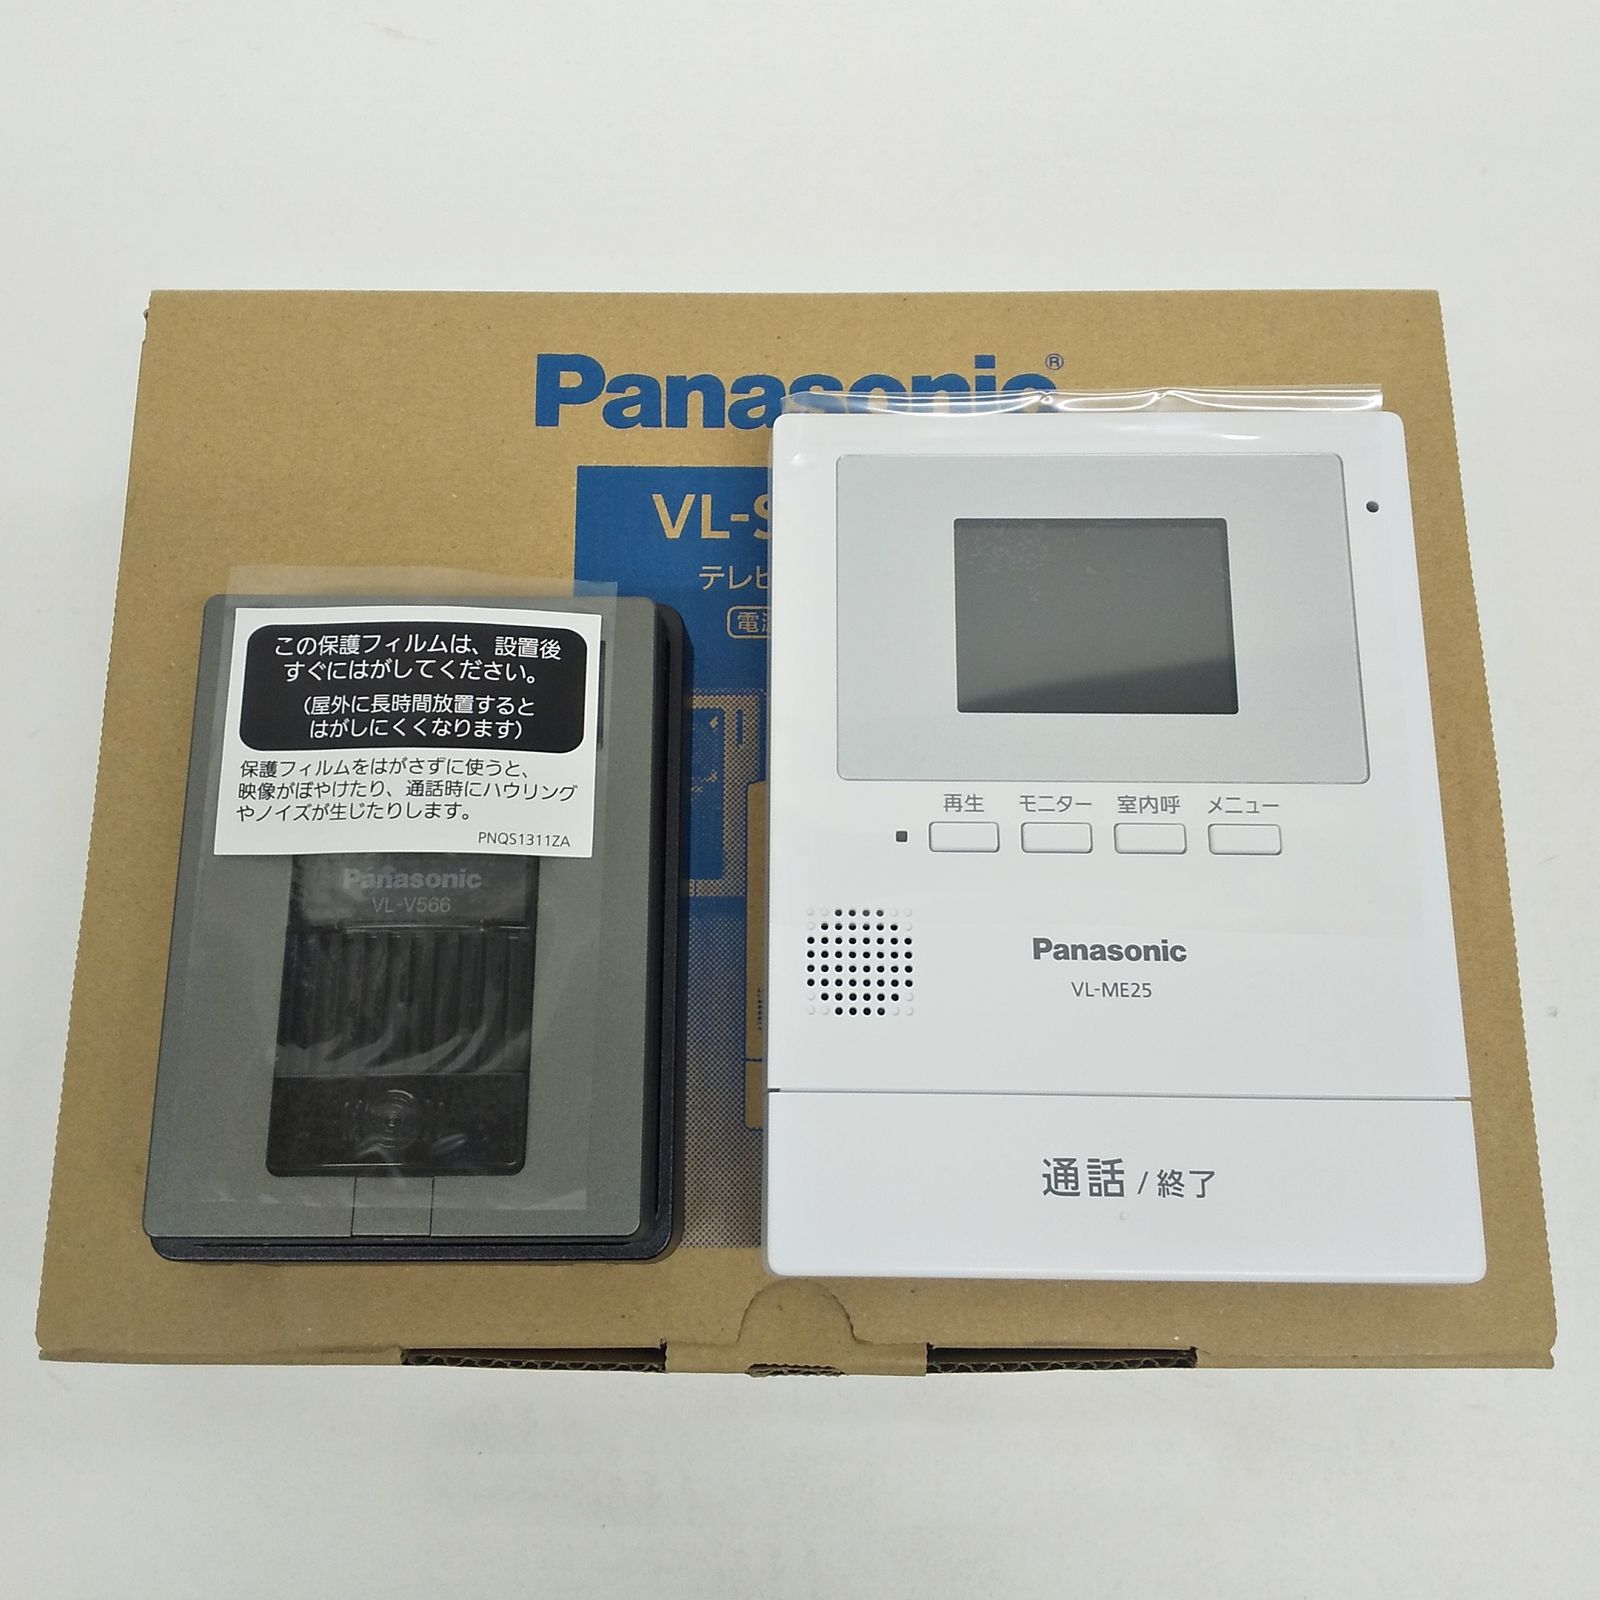 Panasonic カラーテレビドアホン VL-SE25X - 5